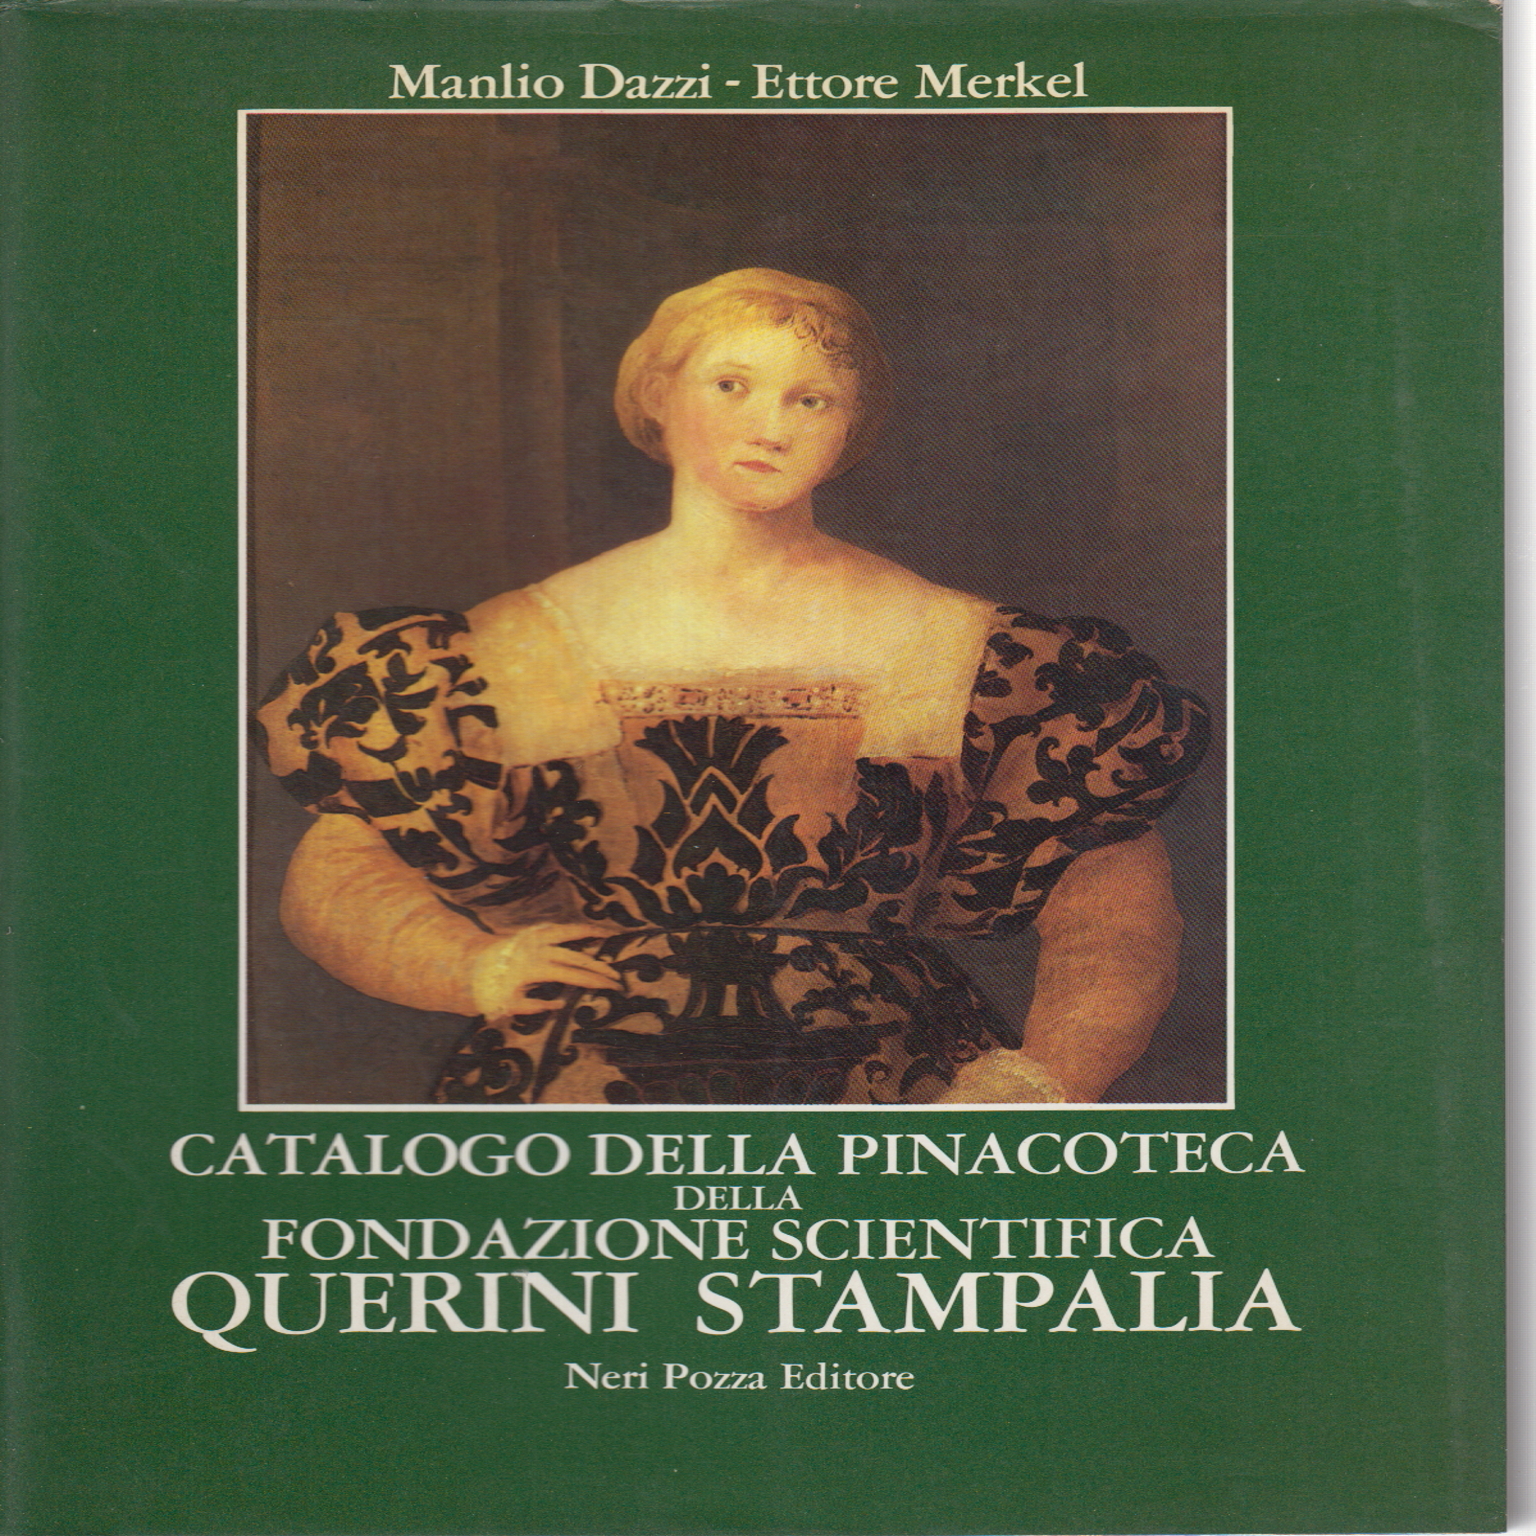 Catalog of the art gallery of the Scienti Foundation, Manlio Dazzi Ettore Merkel